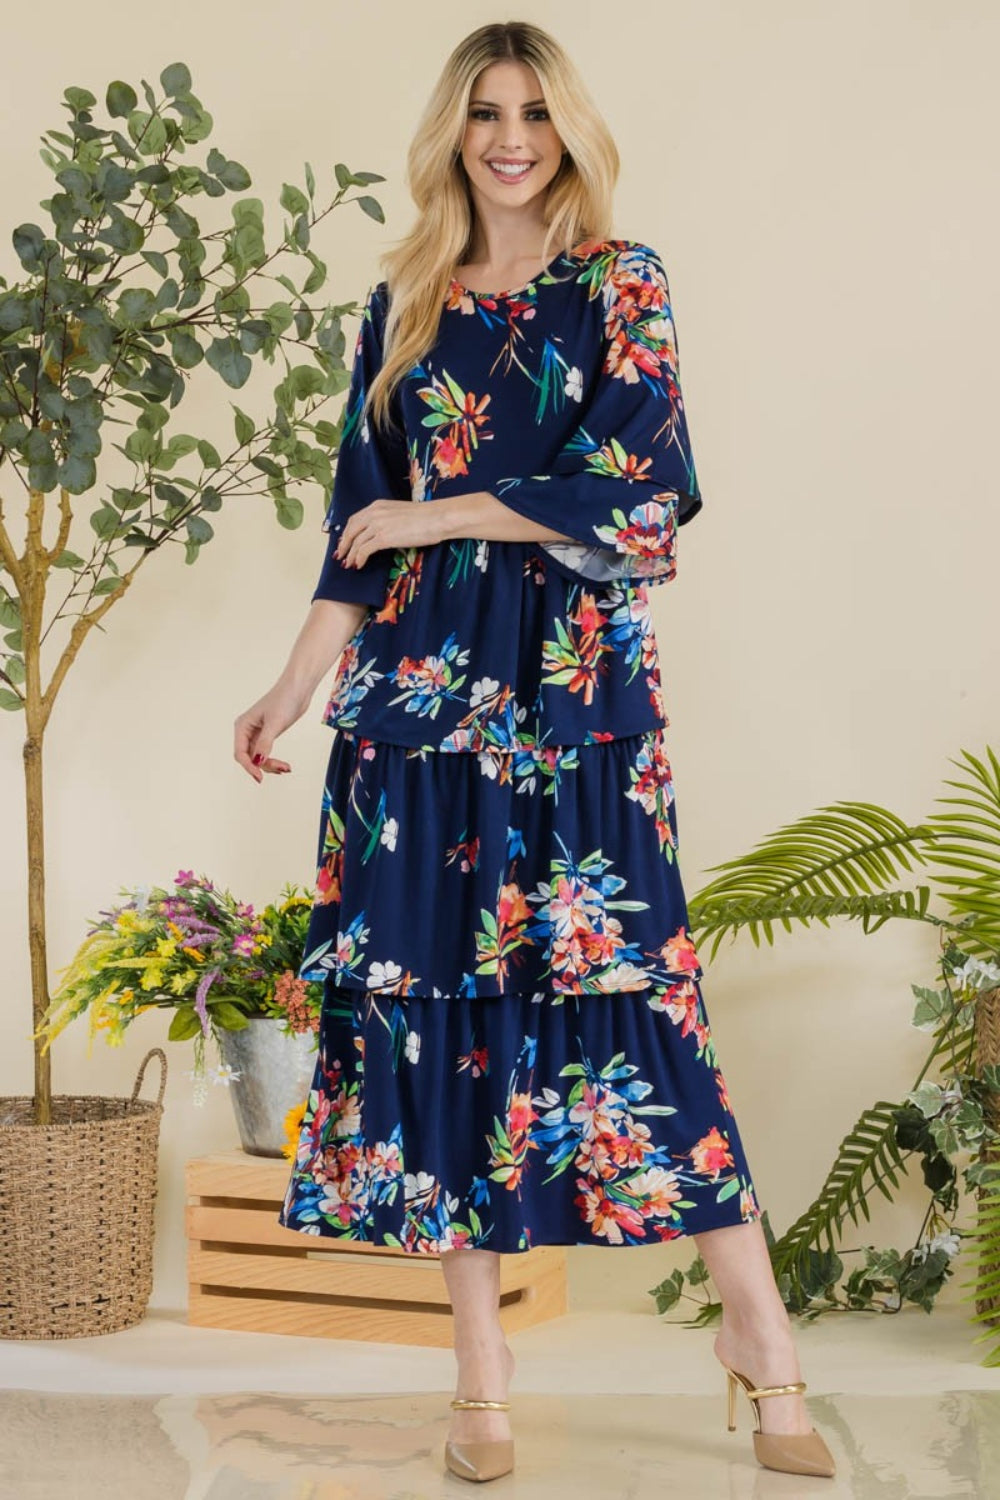 Elegant Floral Midi Dress: Perfect Summer Beach Wedding Attire for Women Guests